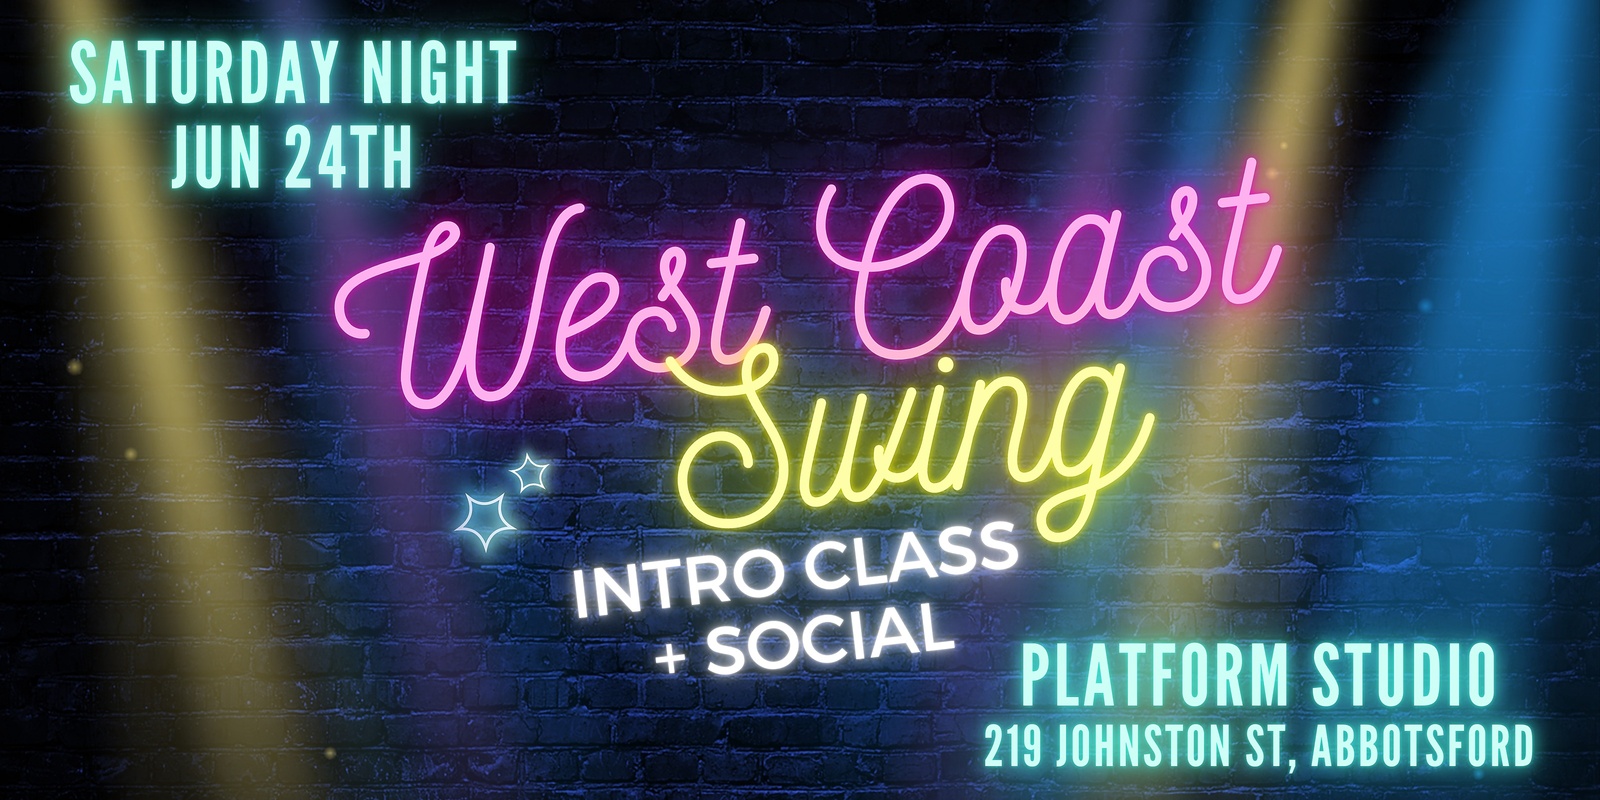 Banner image for Saturday Social + West Coast Swing Intro Class @ Platform Studio!